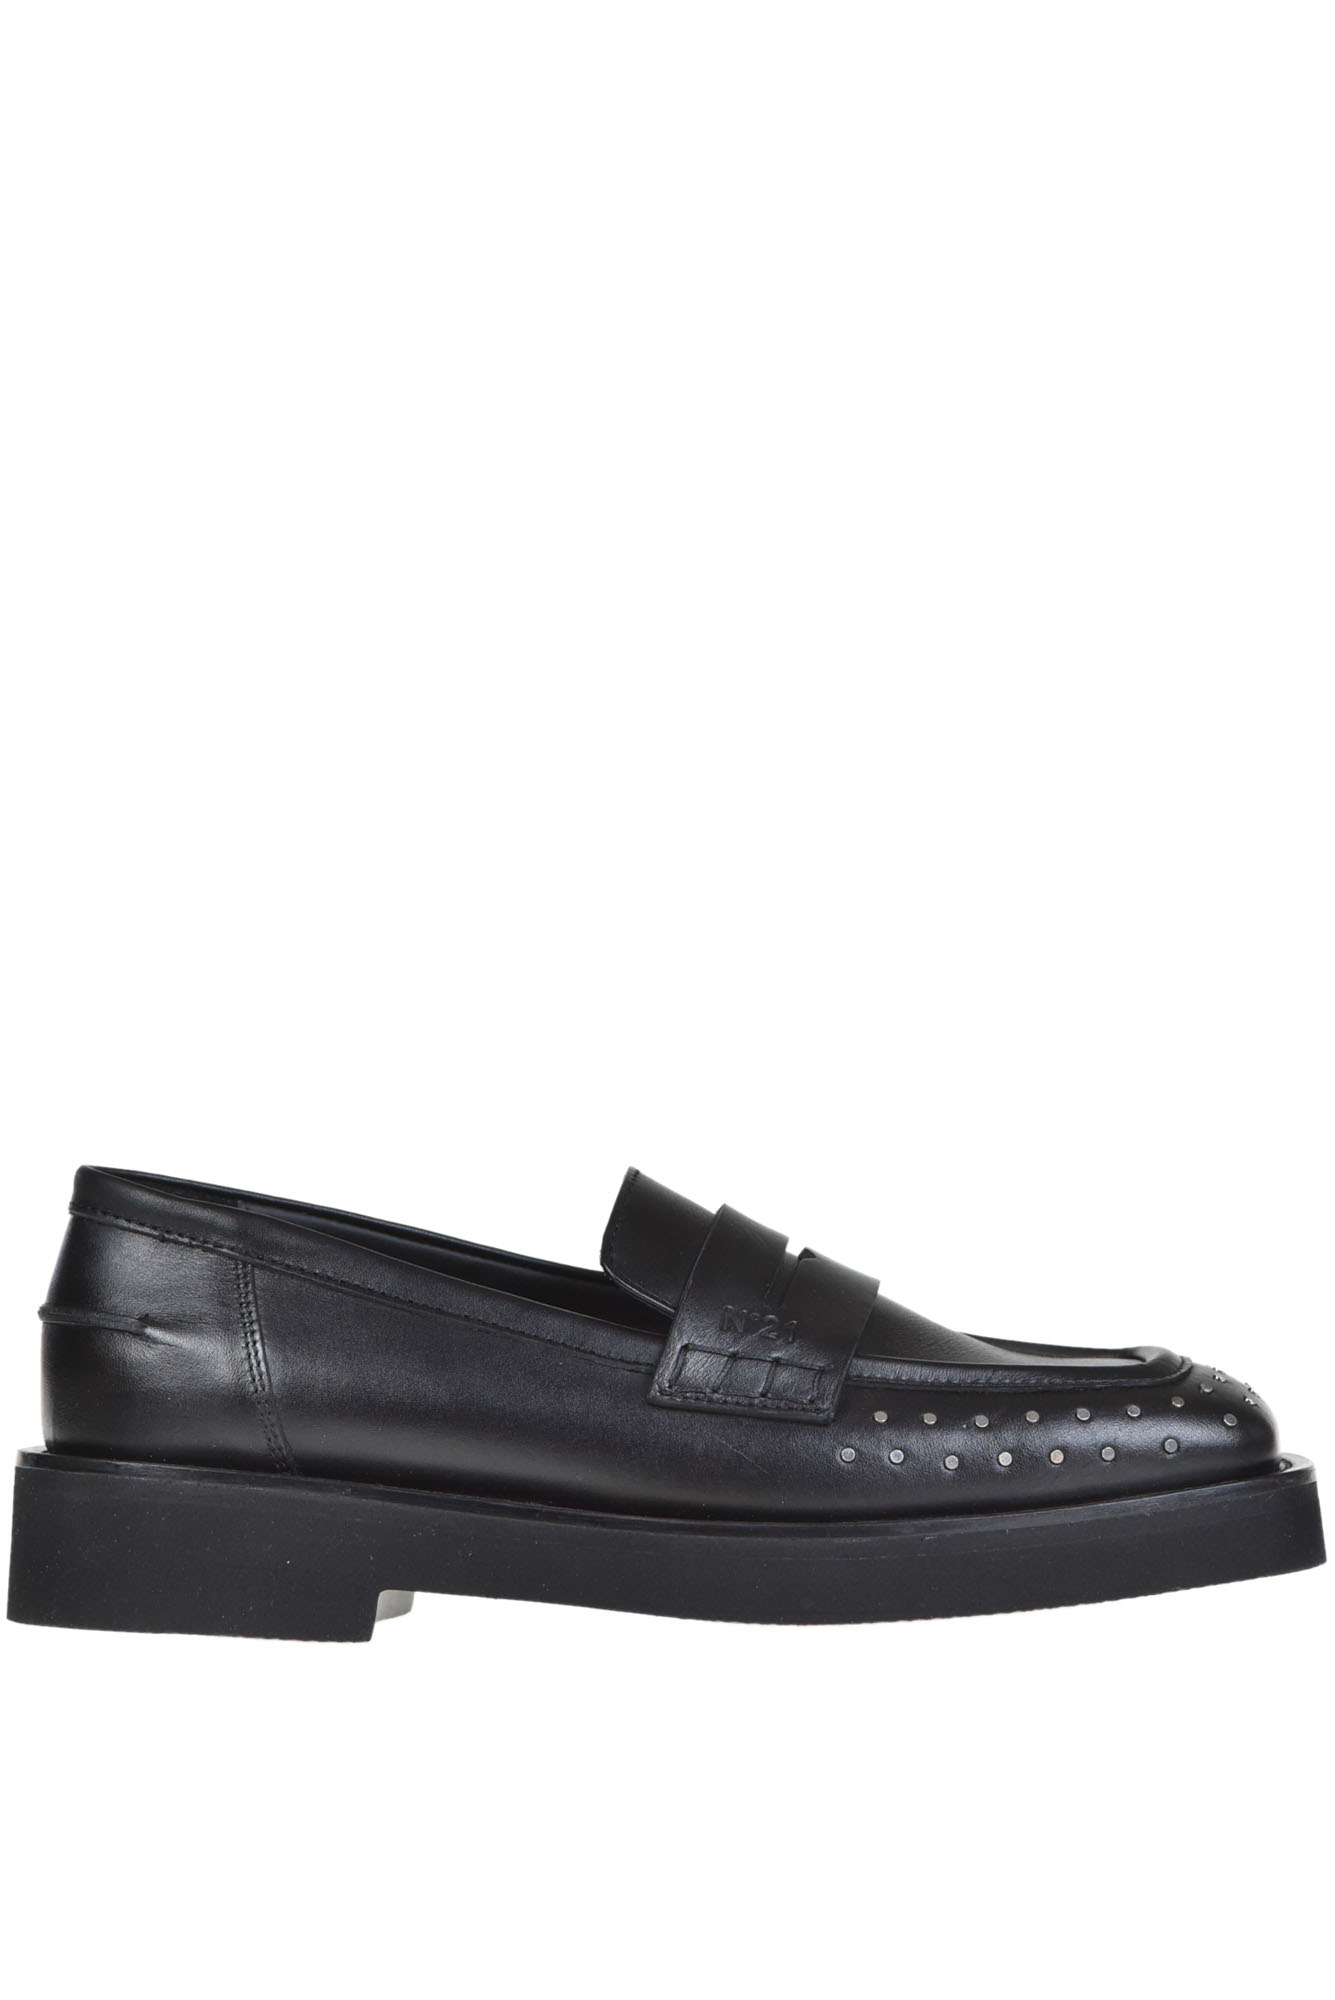 N°21 Woman Loafers Black Size 6 Calfskin